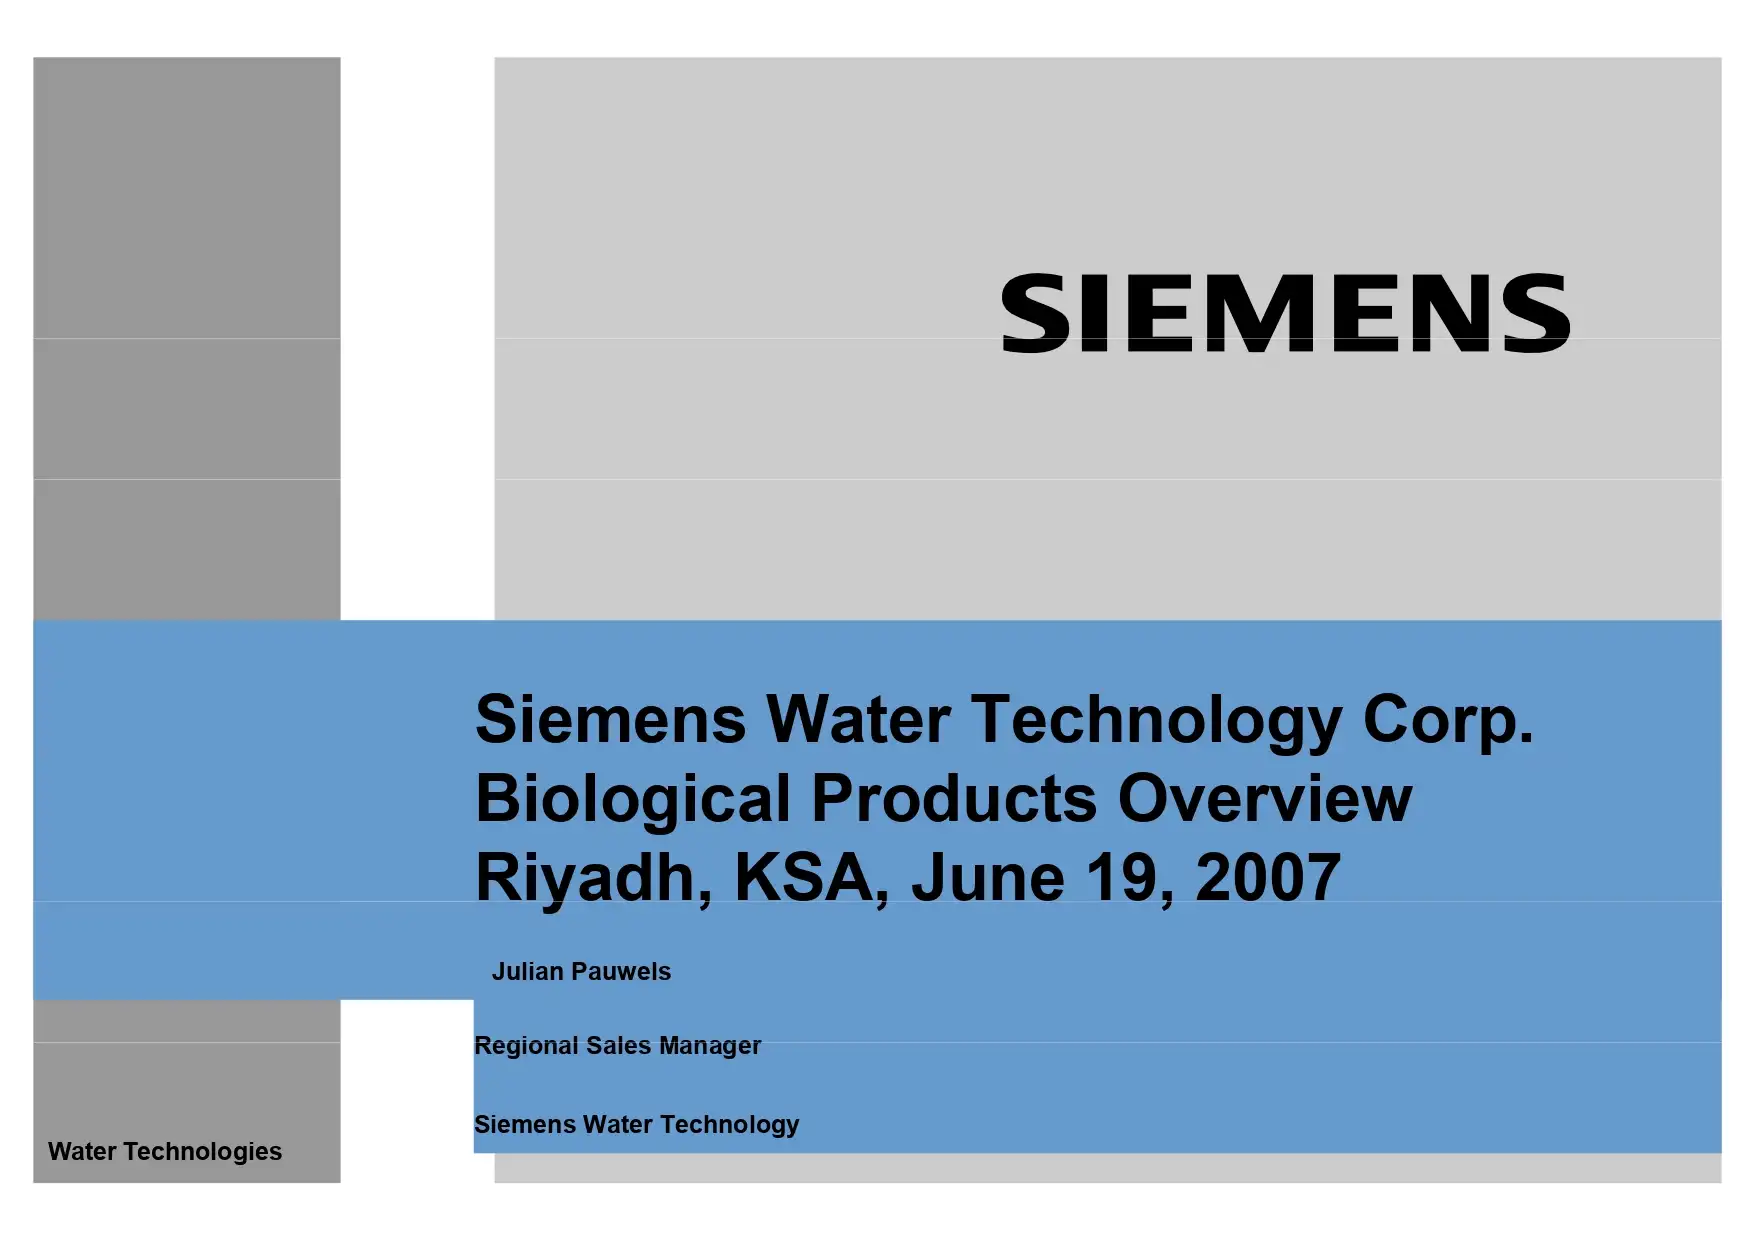 Siemens Water Technology Corp. Biological Books Overview Ri y, , adh , KSA , June 19 , 2007